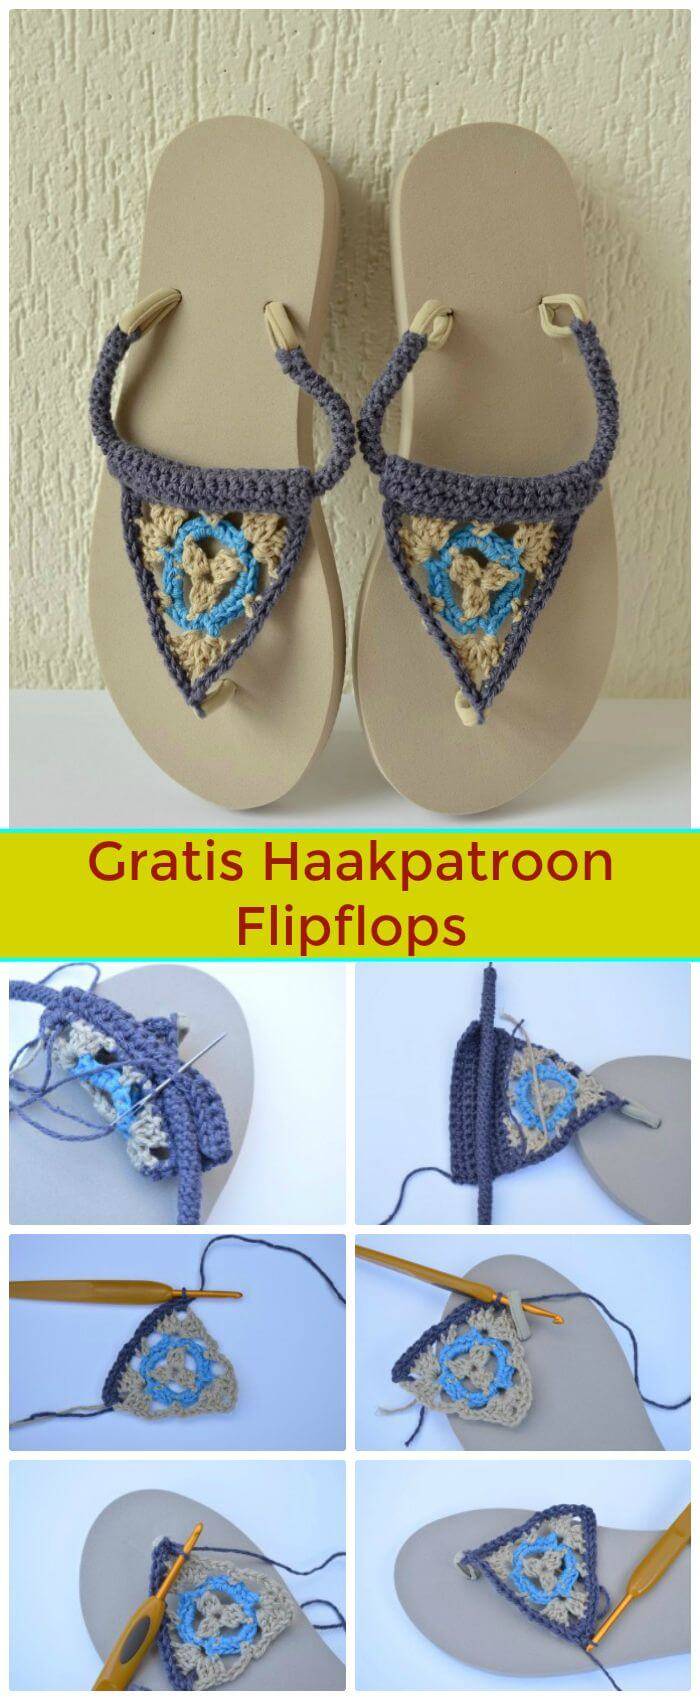 DIY Gratis Haakpatroon Flipflops, crochet flip flop patterns free